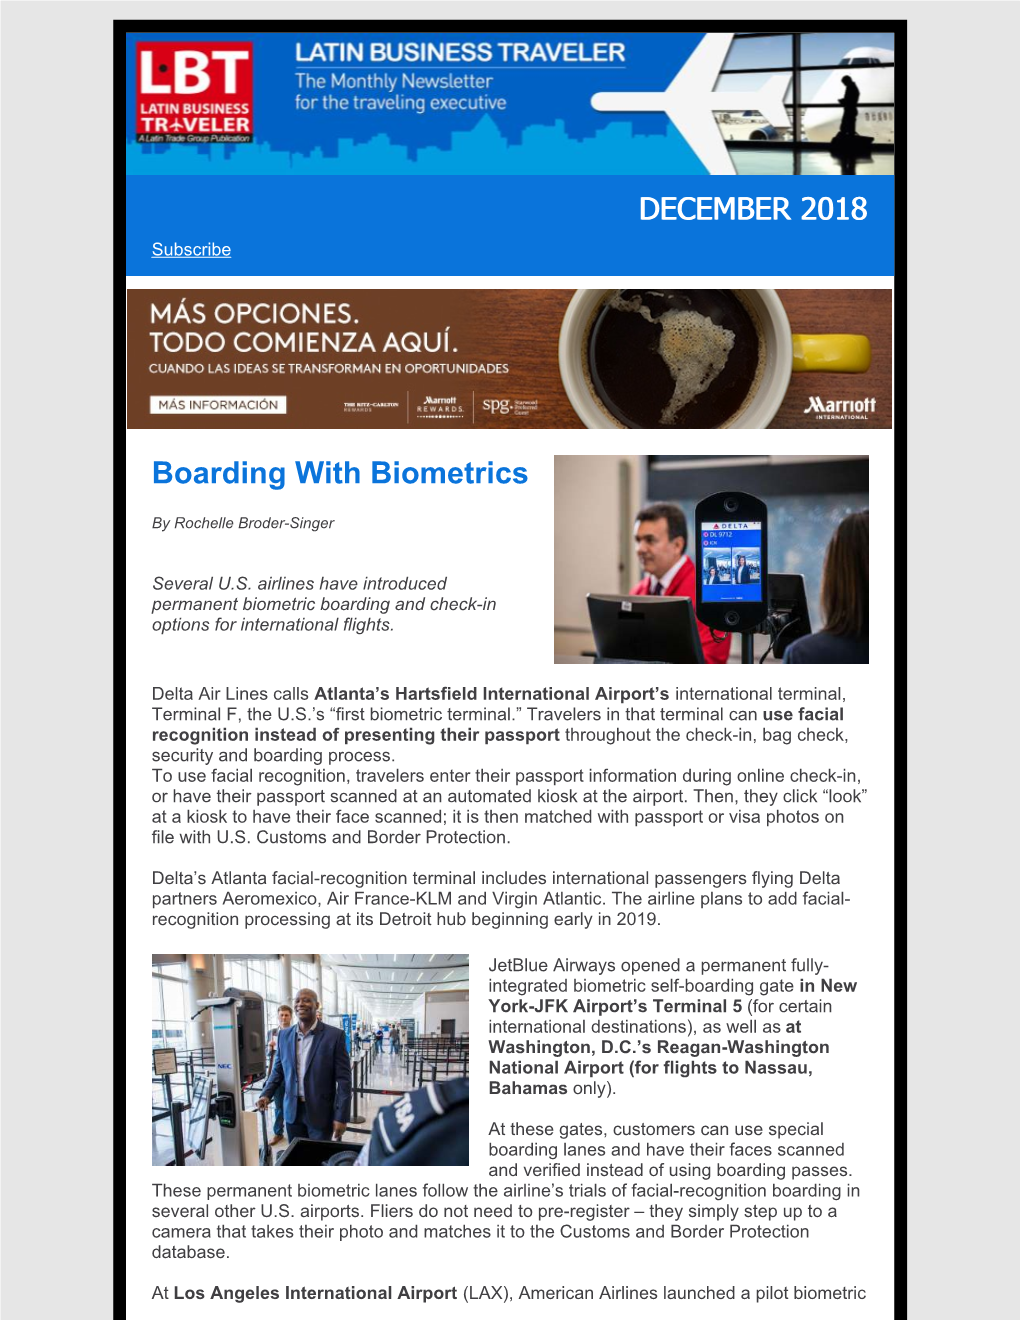 DECEMBER 2018 Boarding with Biometrics